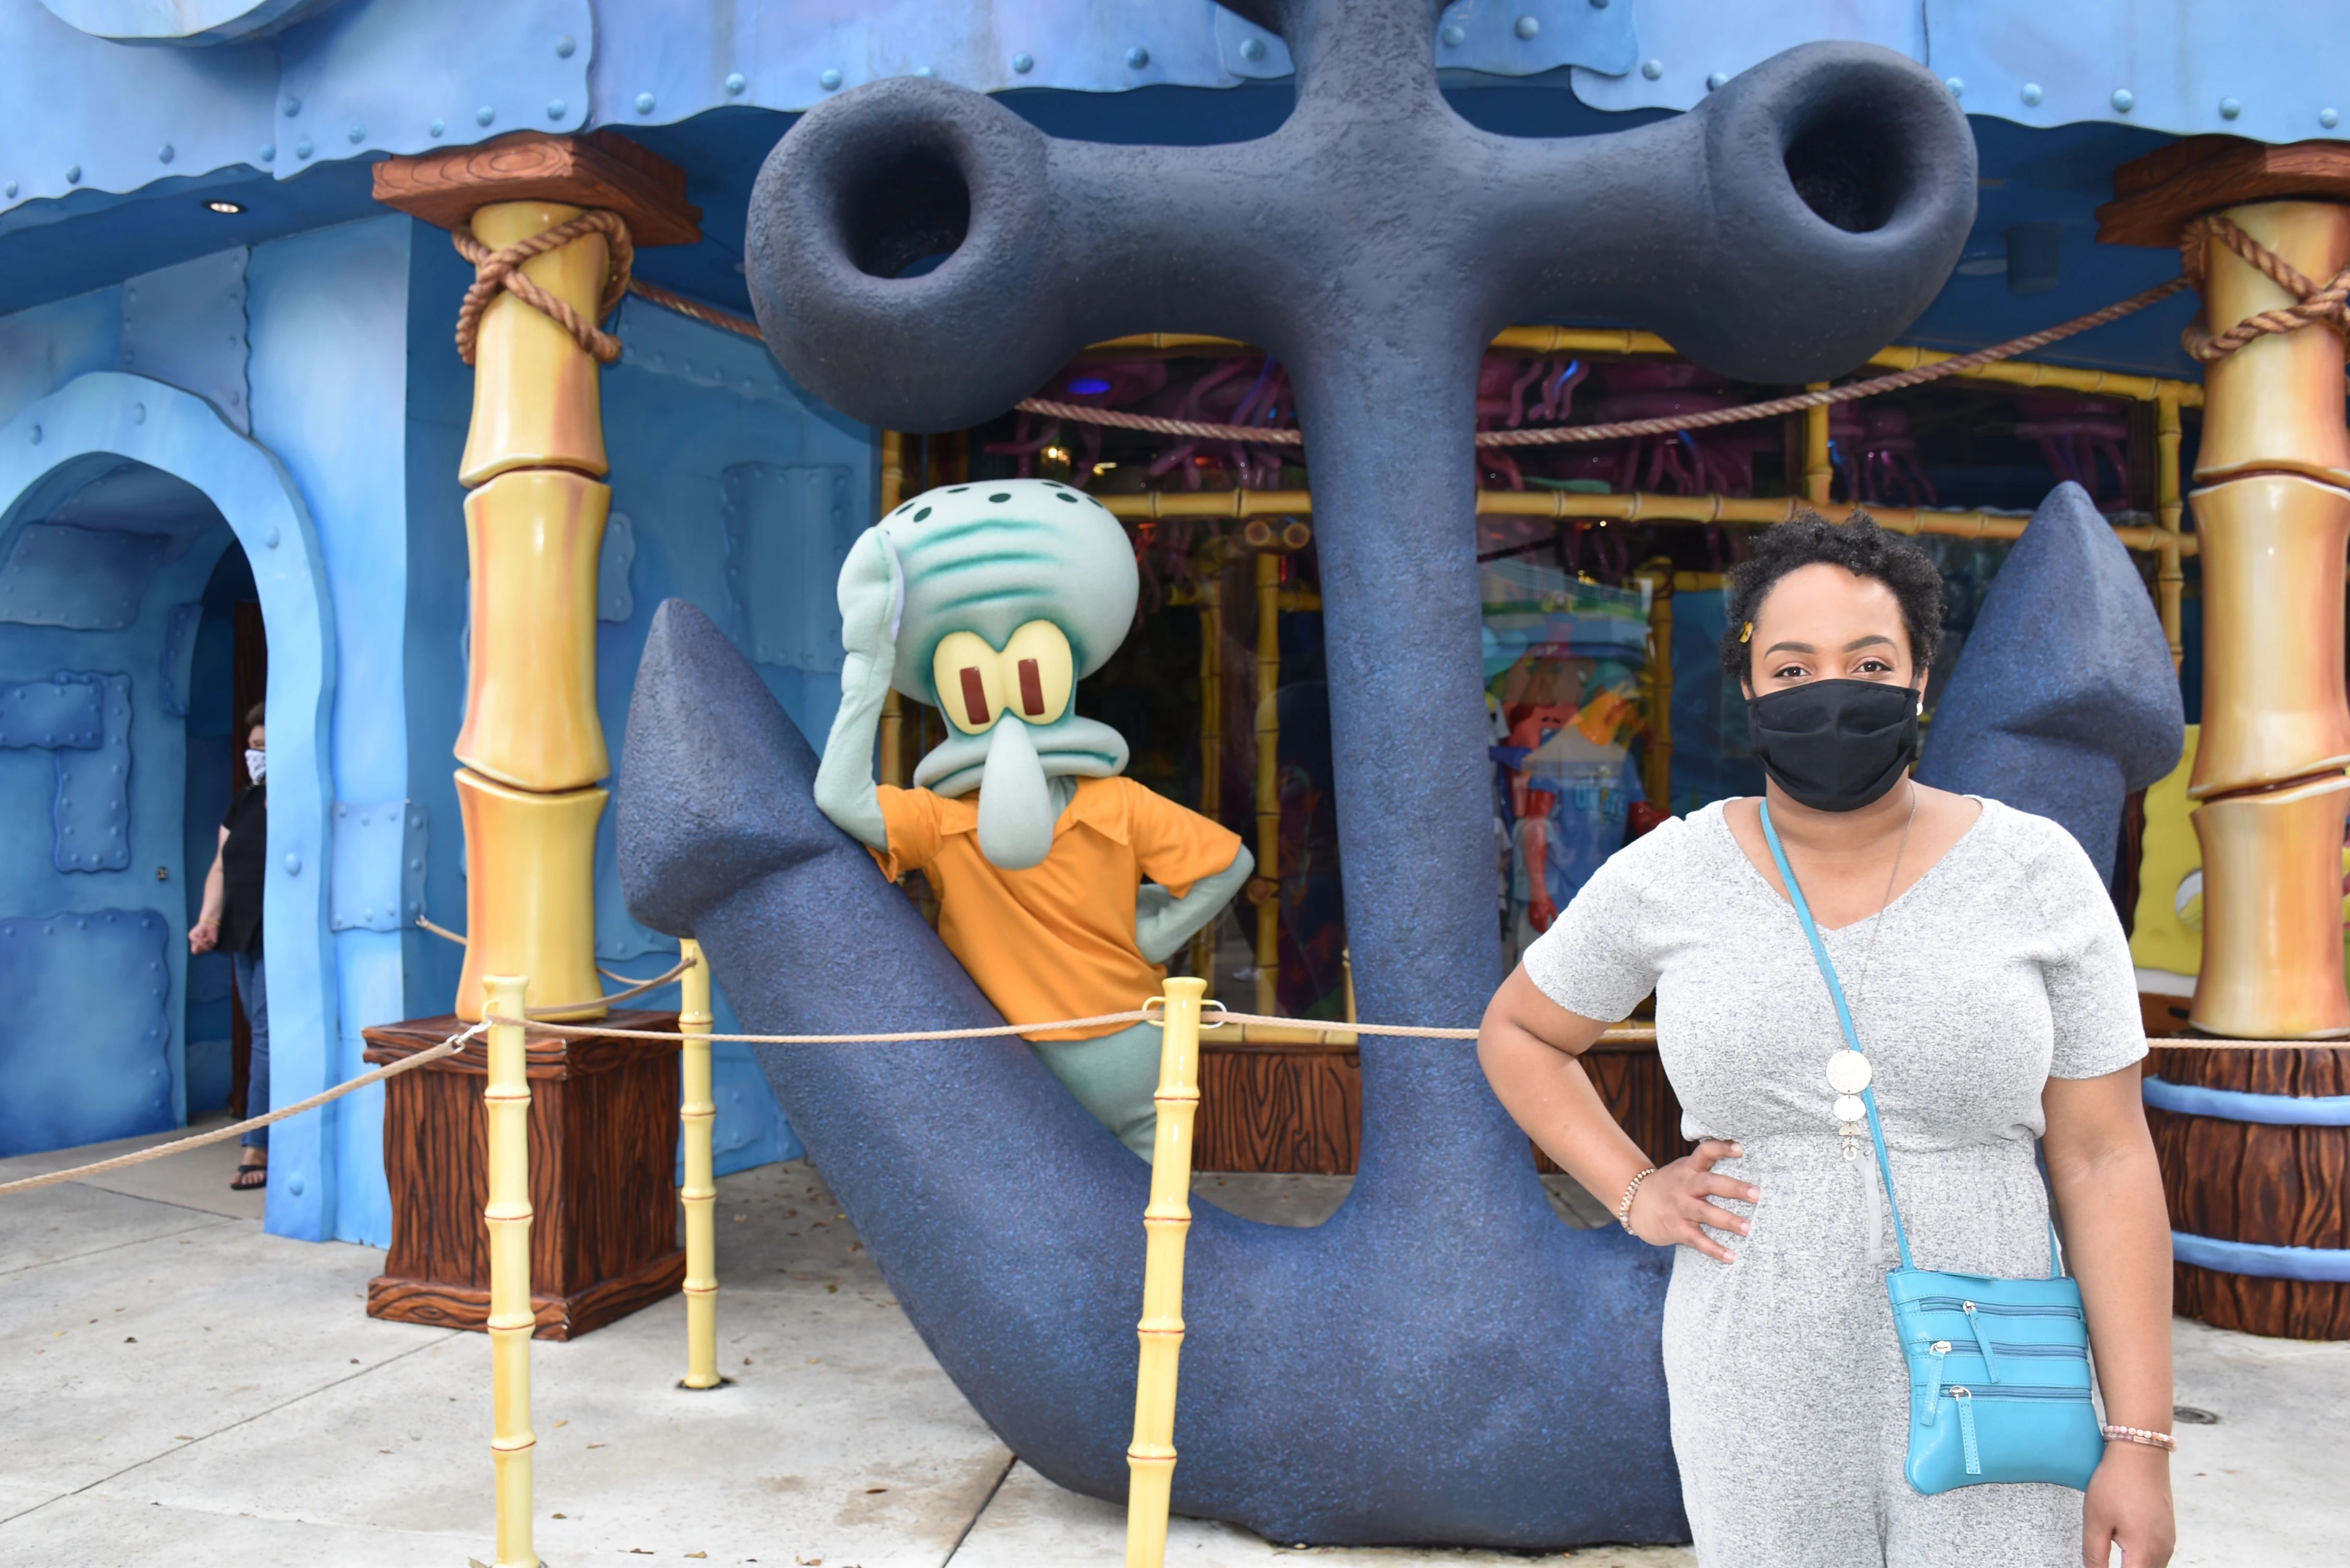 Universal Studios Florida with Squidward from Spongebob